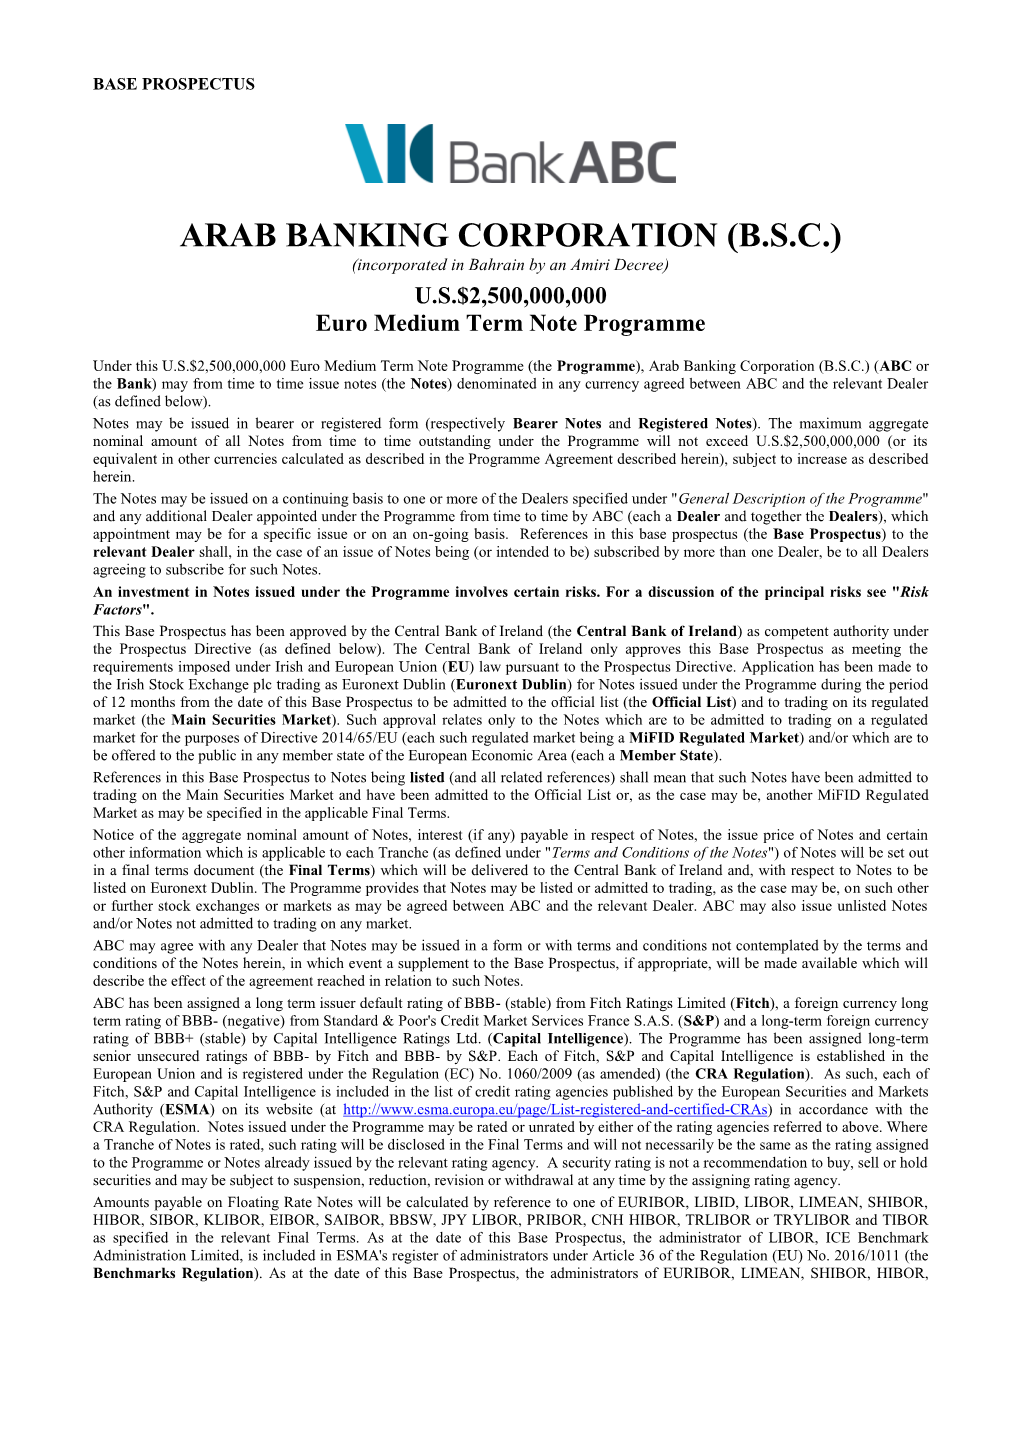 ARAB BANKING CORPORATION (B.S.C.) (Incorporated in Bahrain by an Amiri Decree) U.S.$2,500,000,000 Euro Medium Term Note Programme